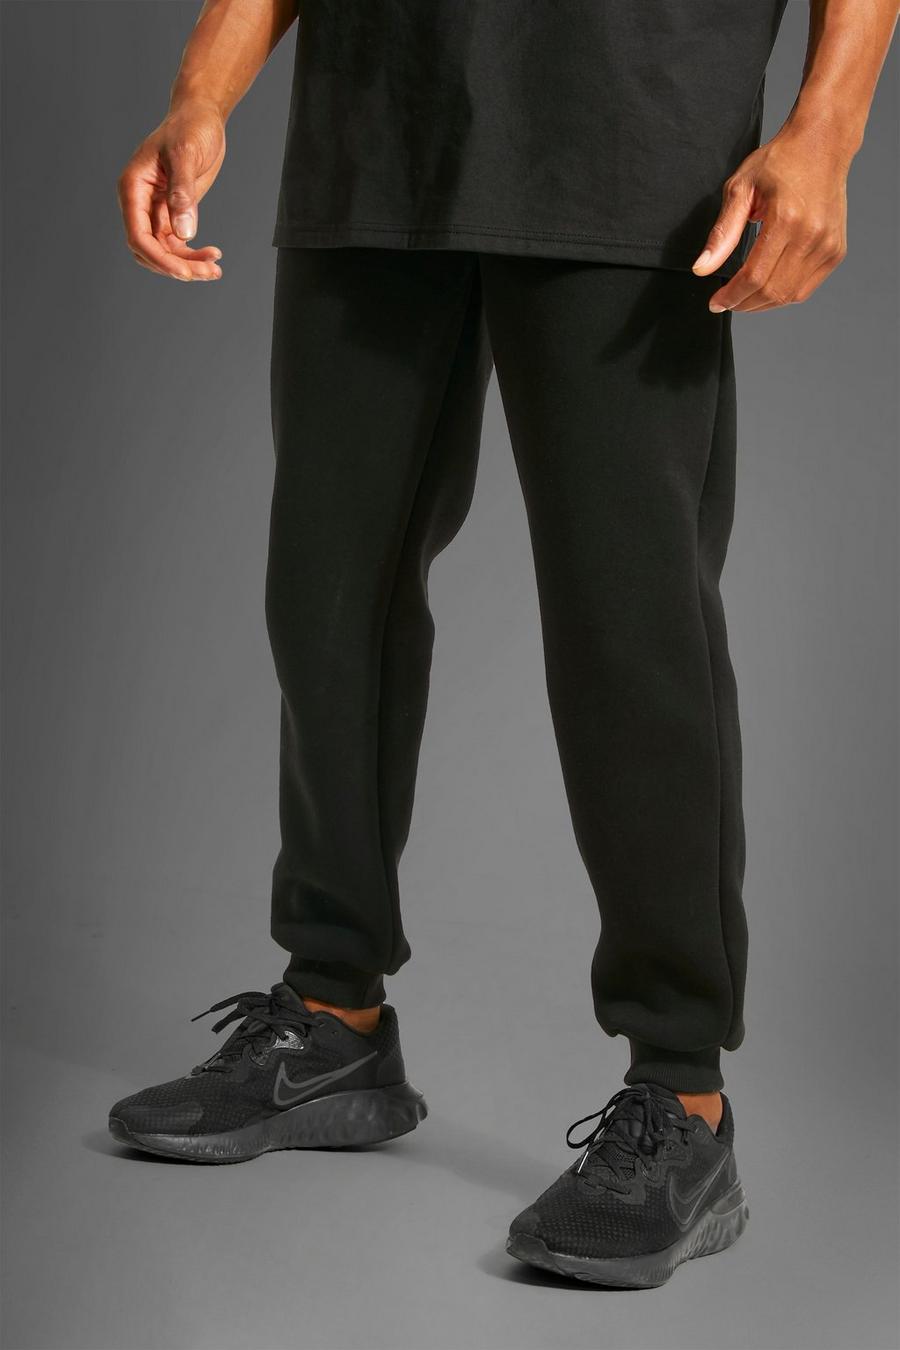 Pantaloni tuta comodi Man Active Gym, Black negro image number 1